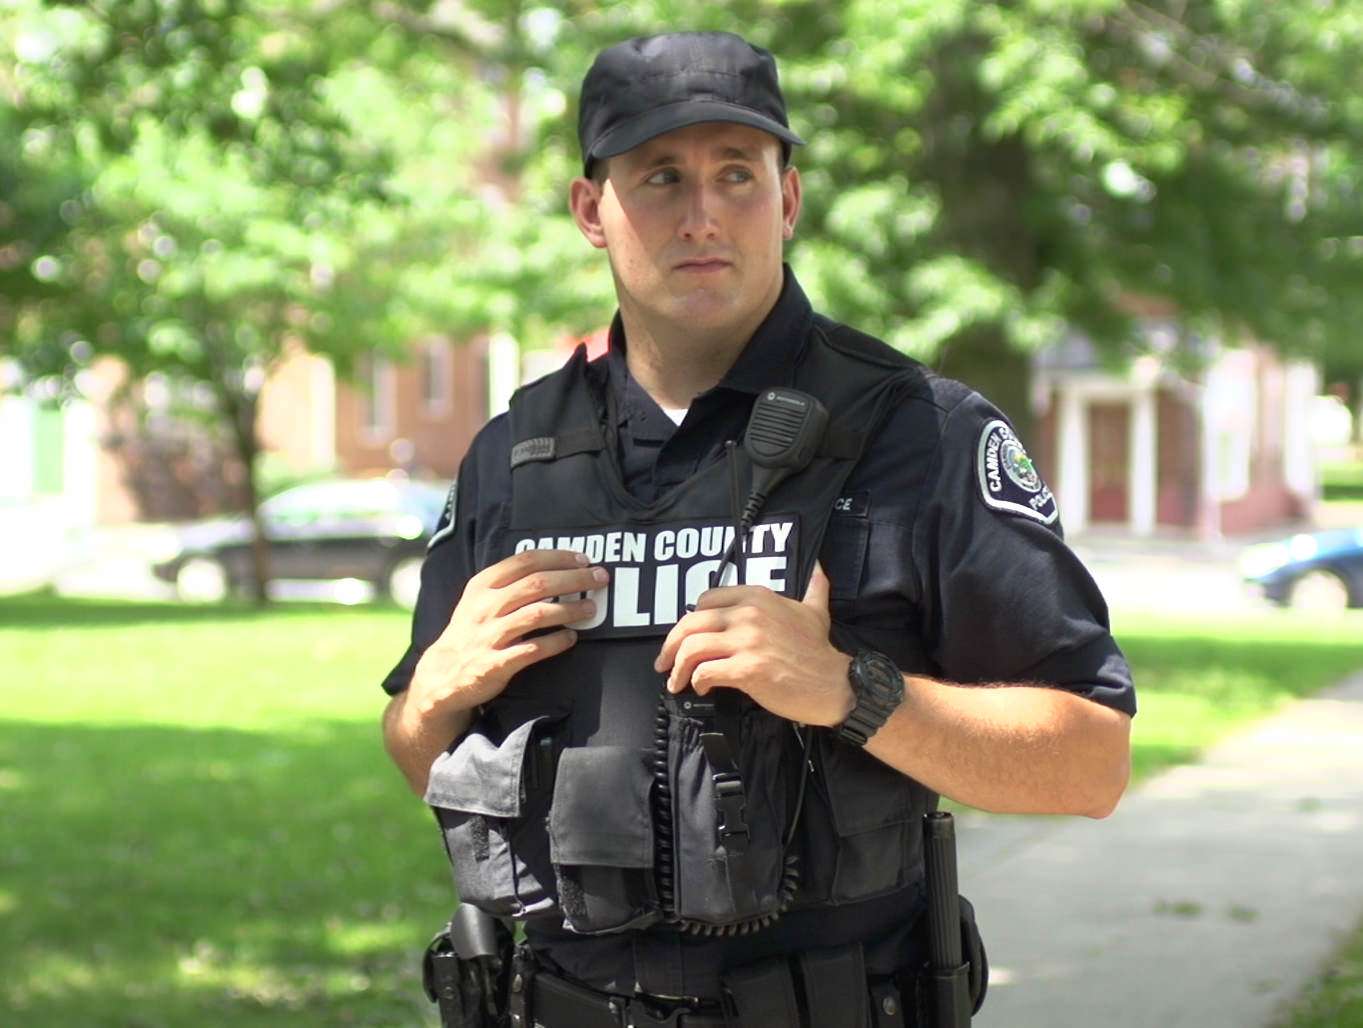 A Metro cop on foot patrol. ||| Jim Epstein